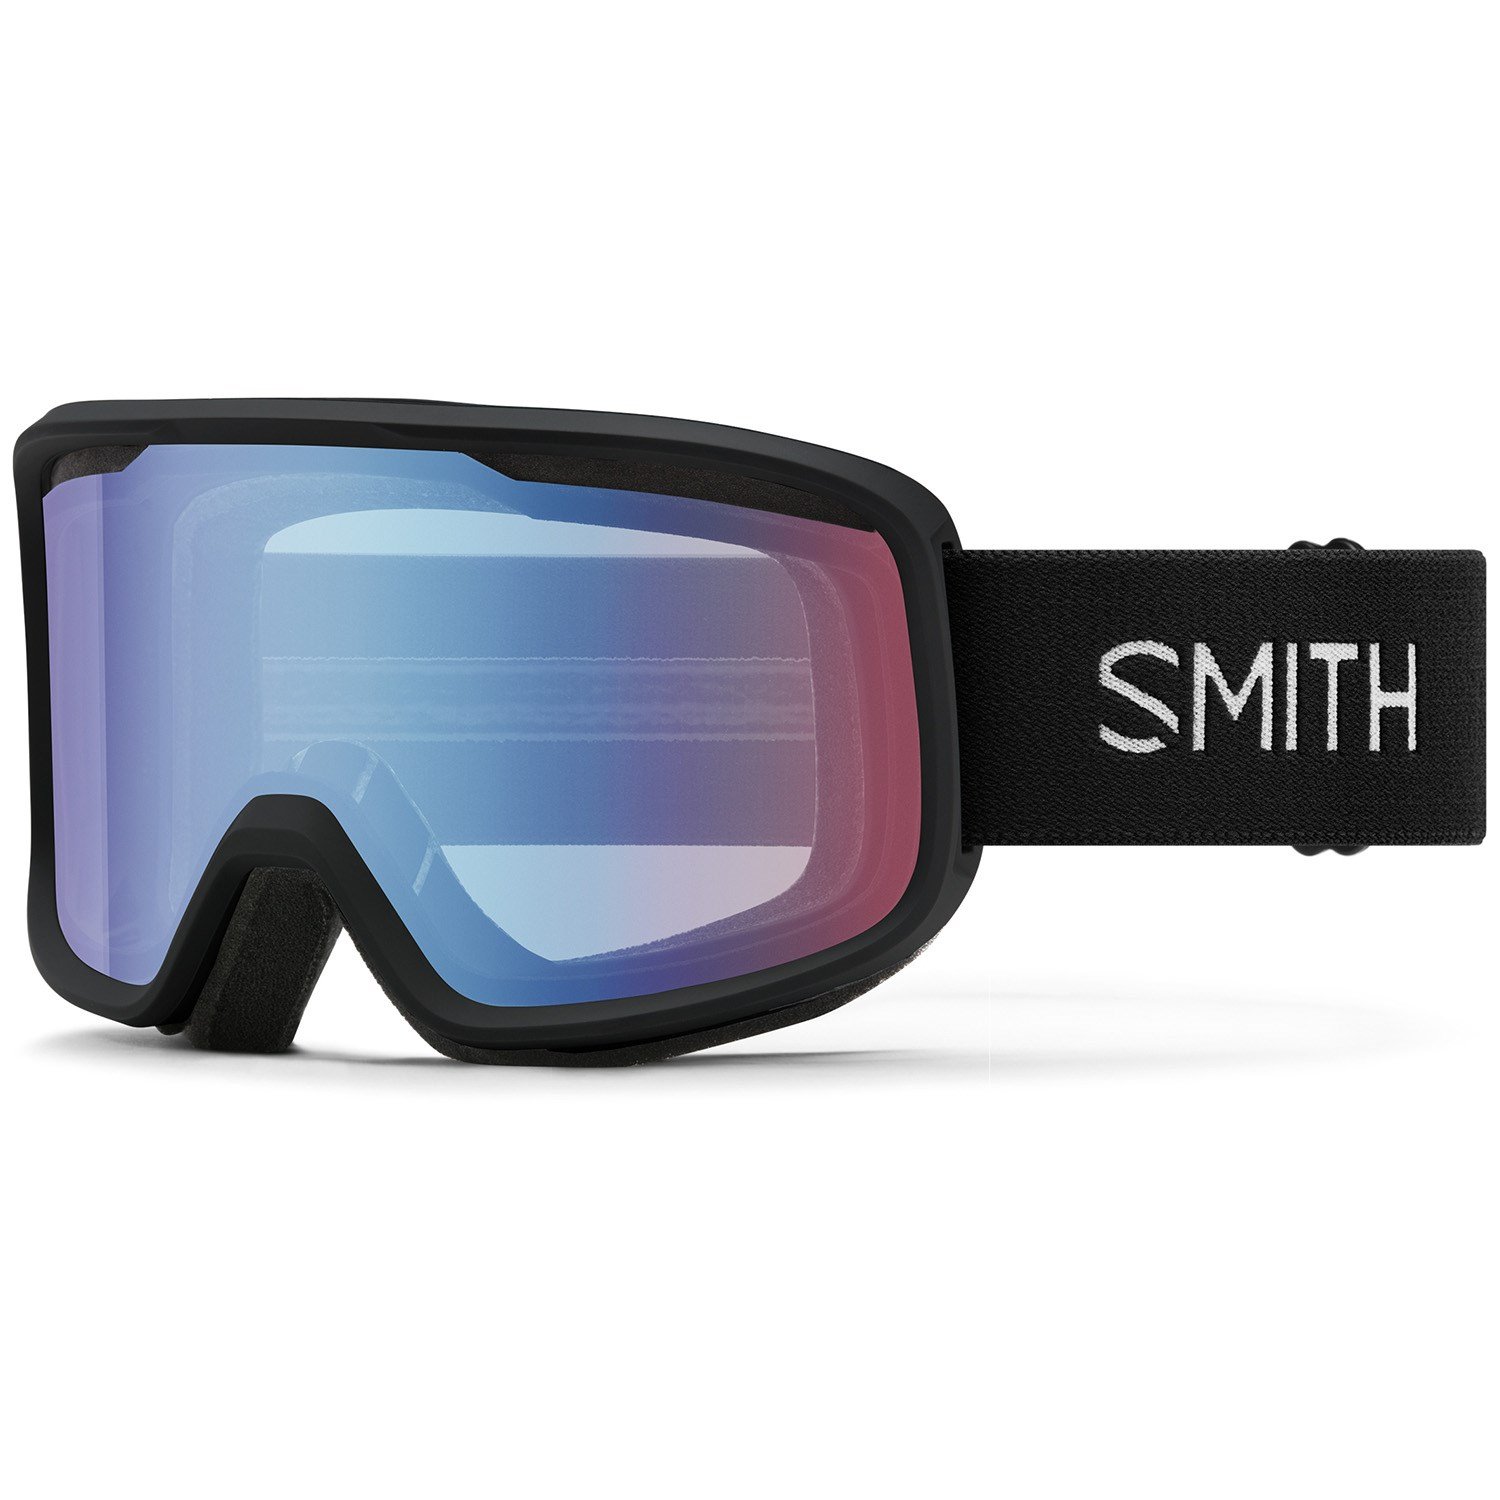 Smith Frontier Goggles | evo